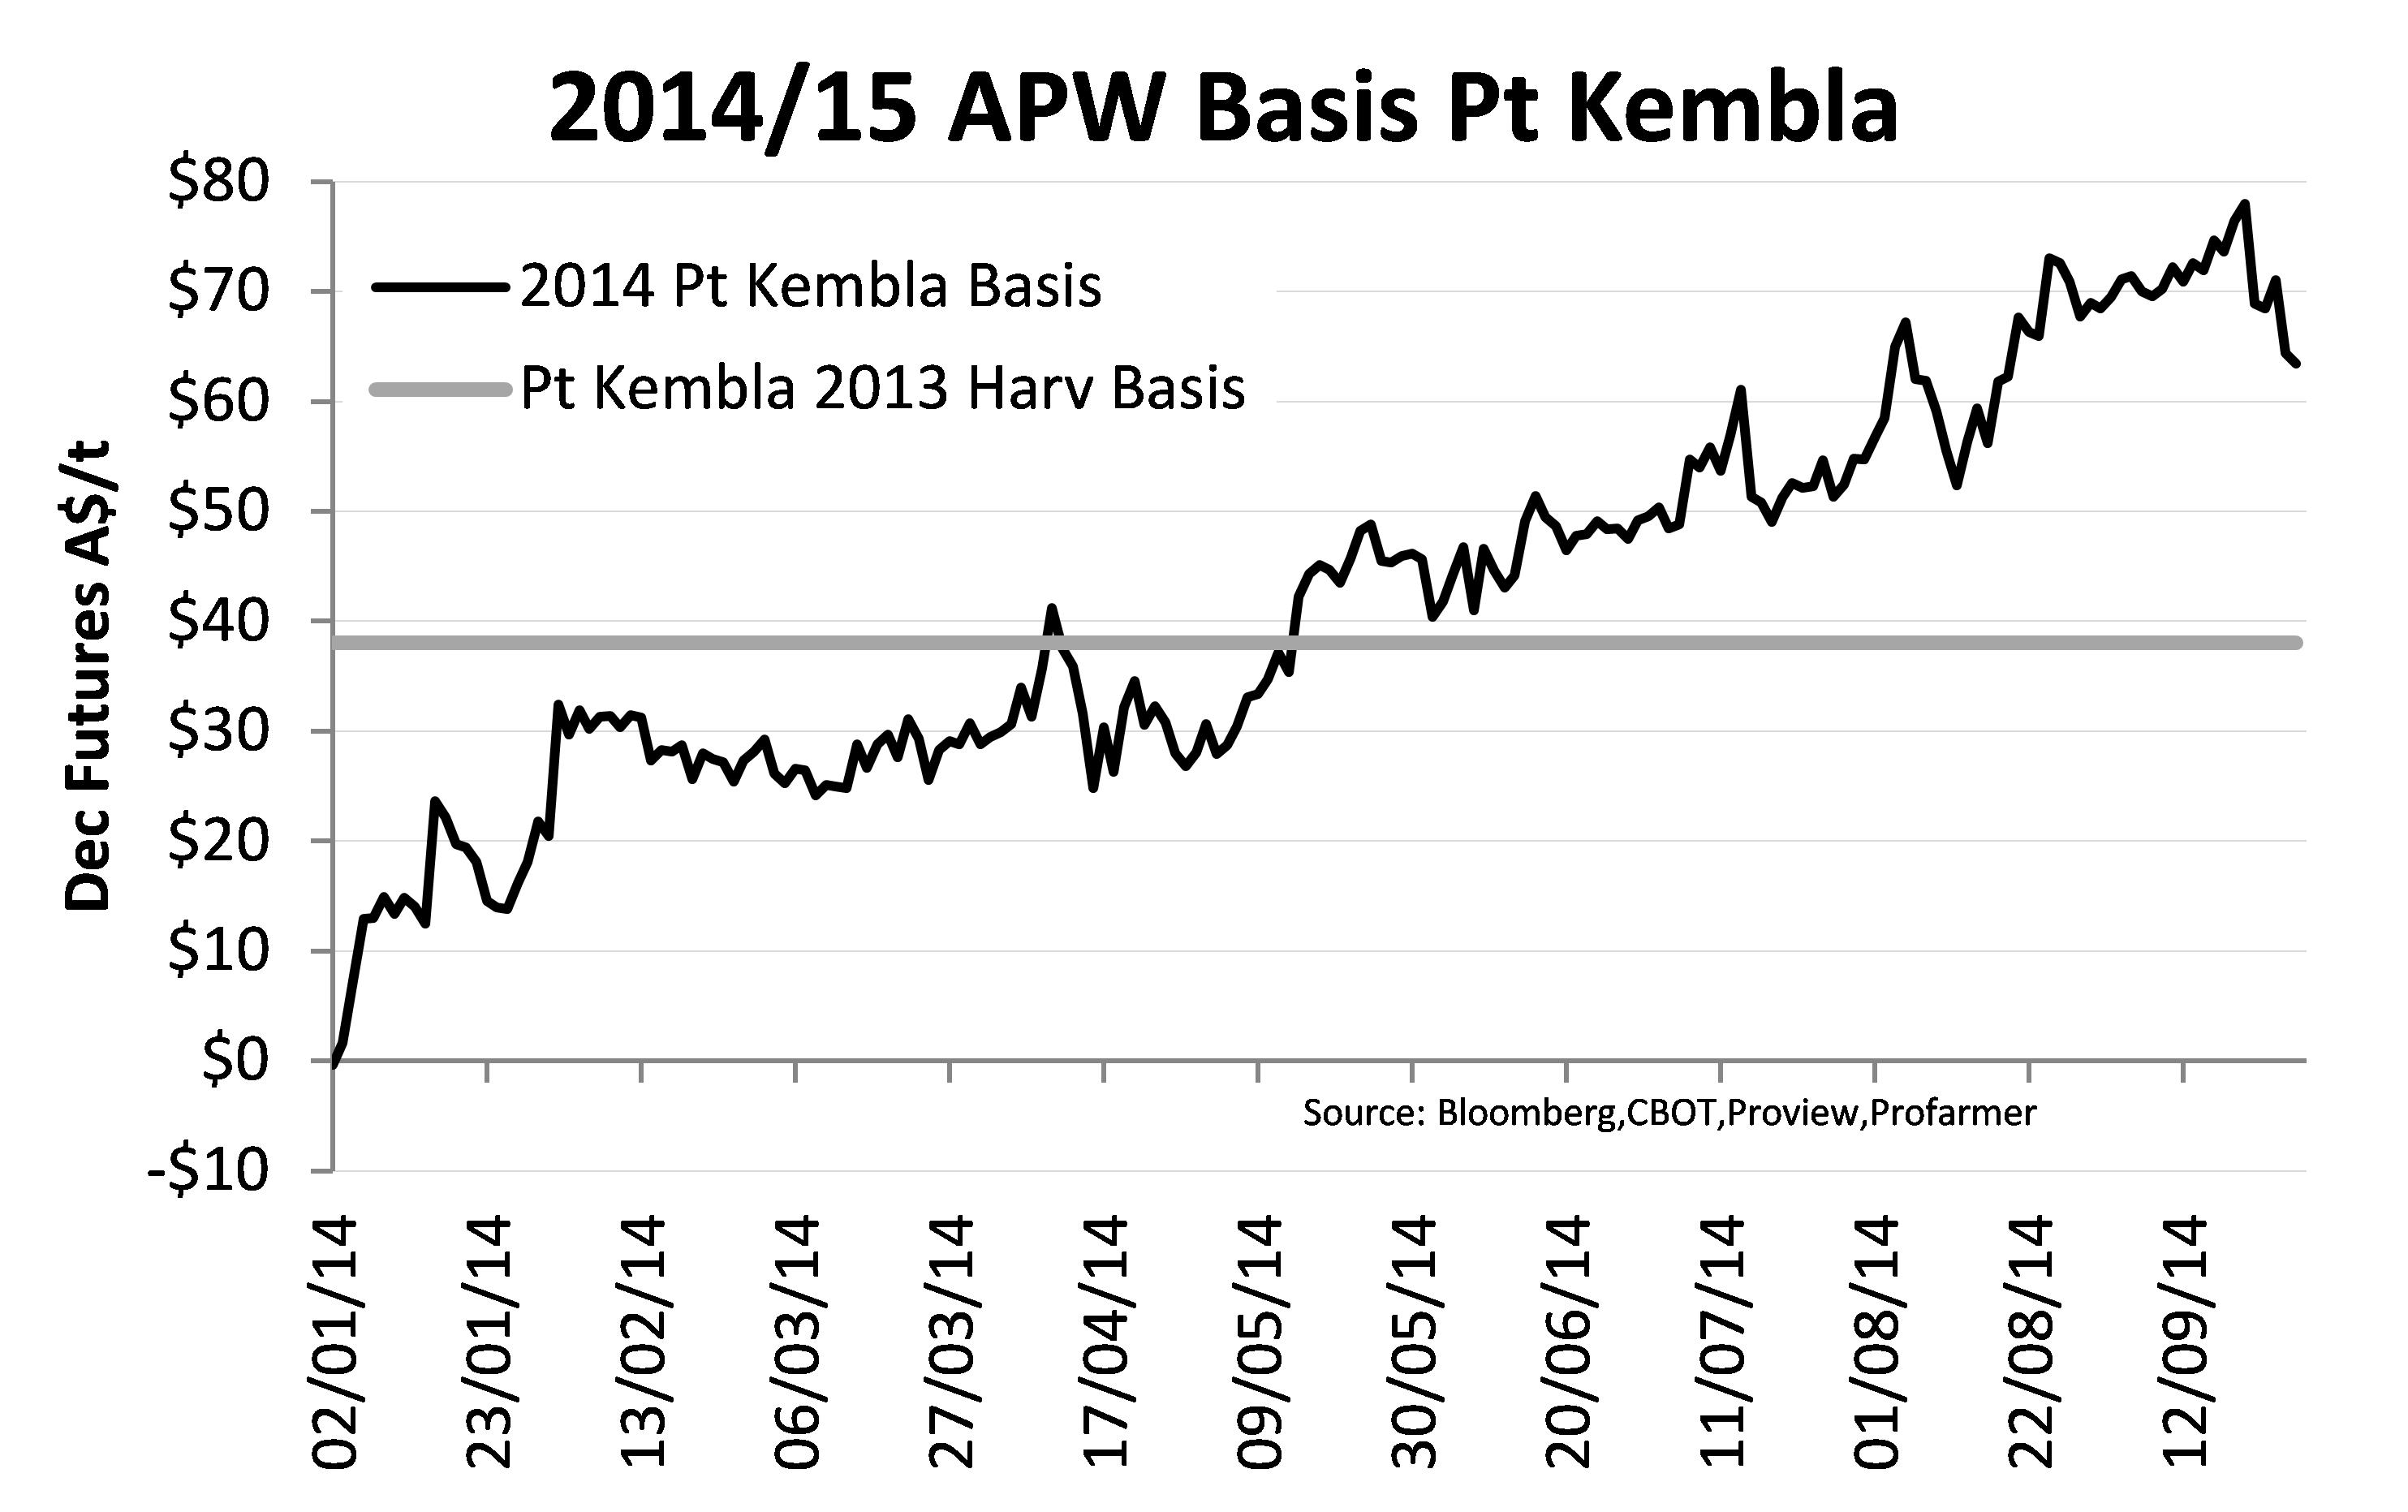 Figure 7. 2014/15 APW Basis Port Kembla.